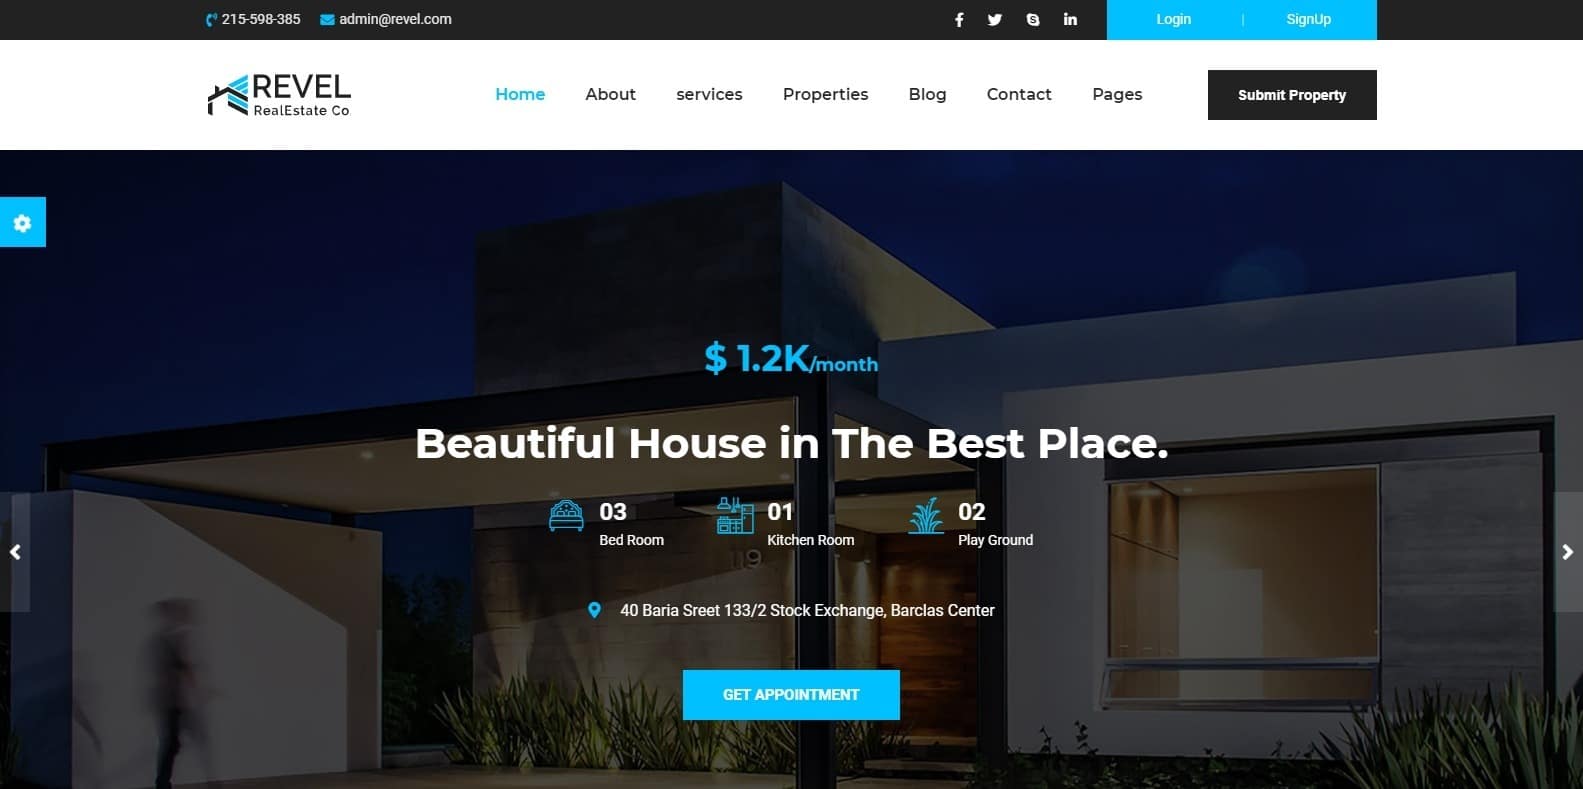 revel-real-estate-website-template